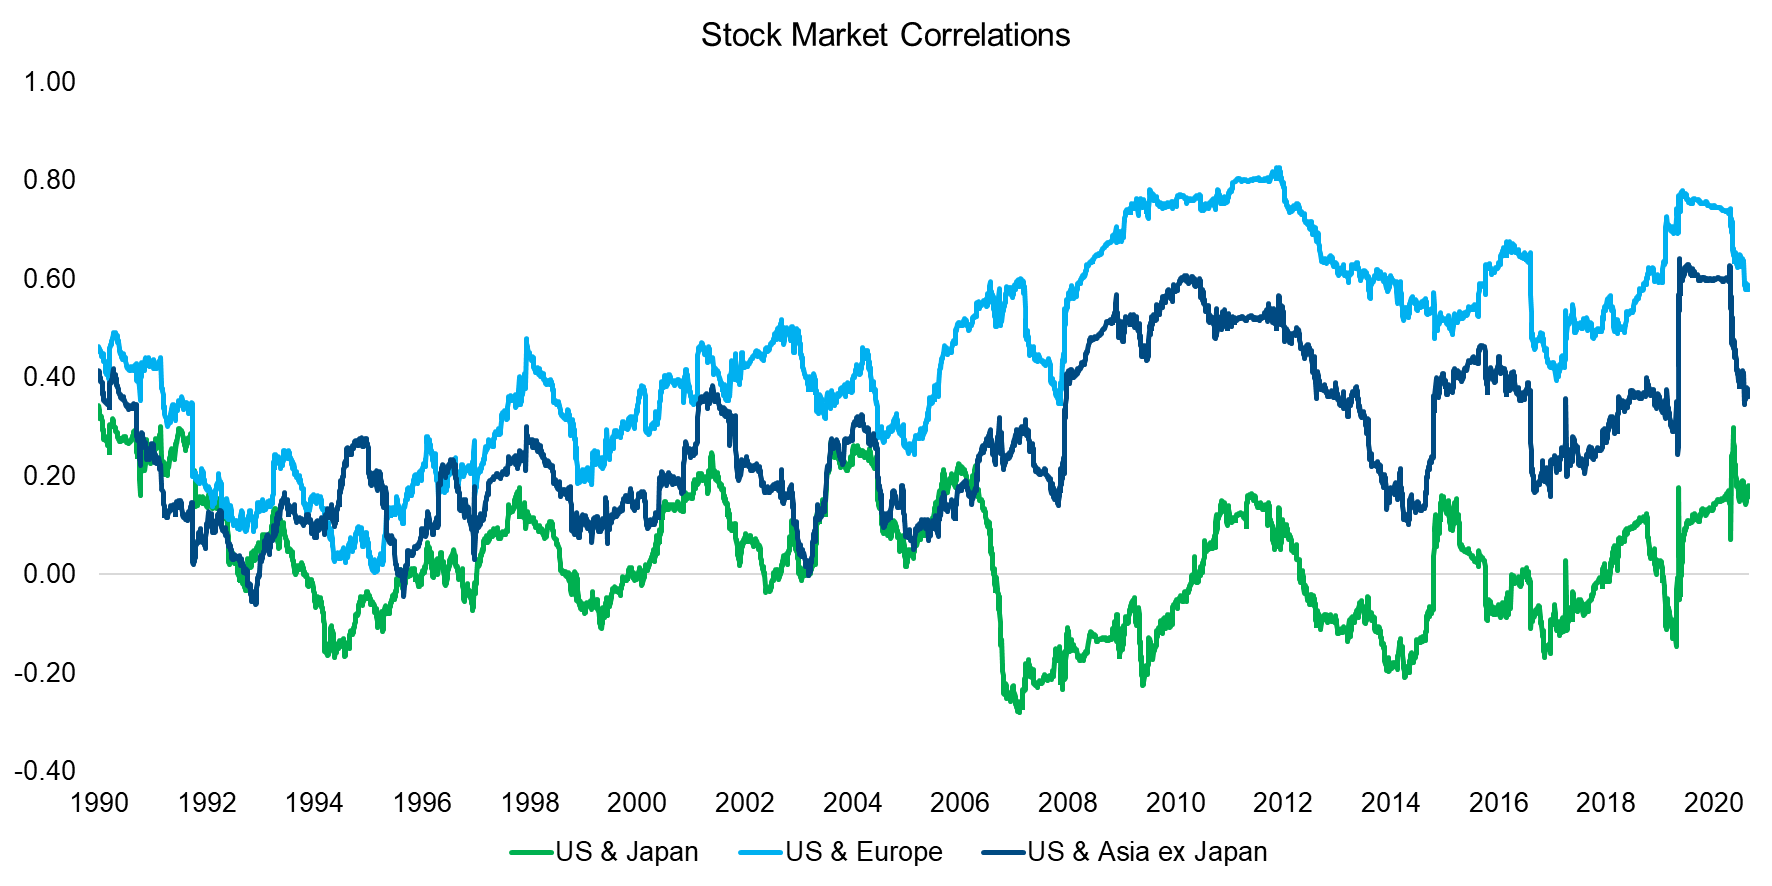 Stock Market Correlations